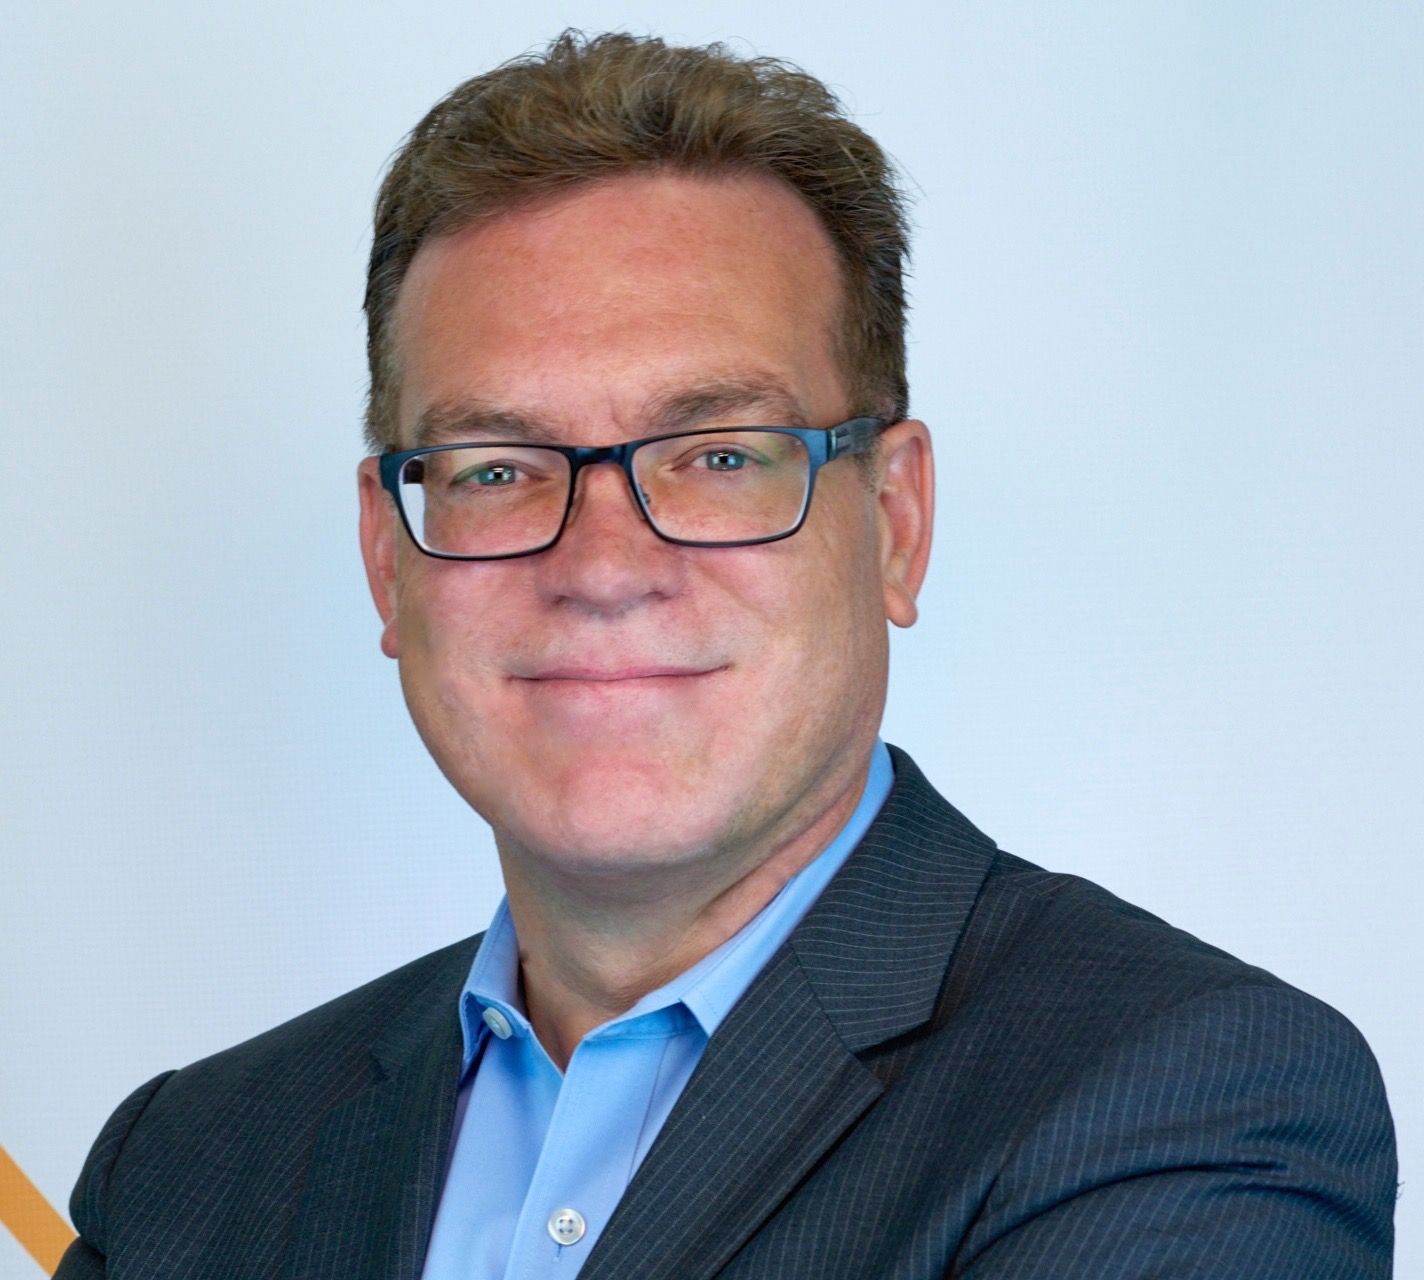 Jim Bryant - CEO of WellnessNews